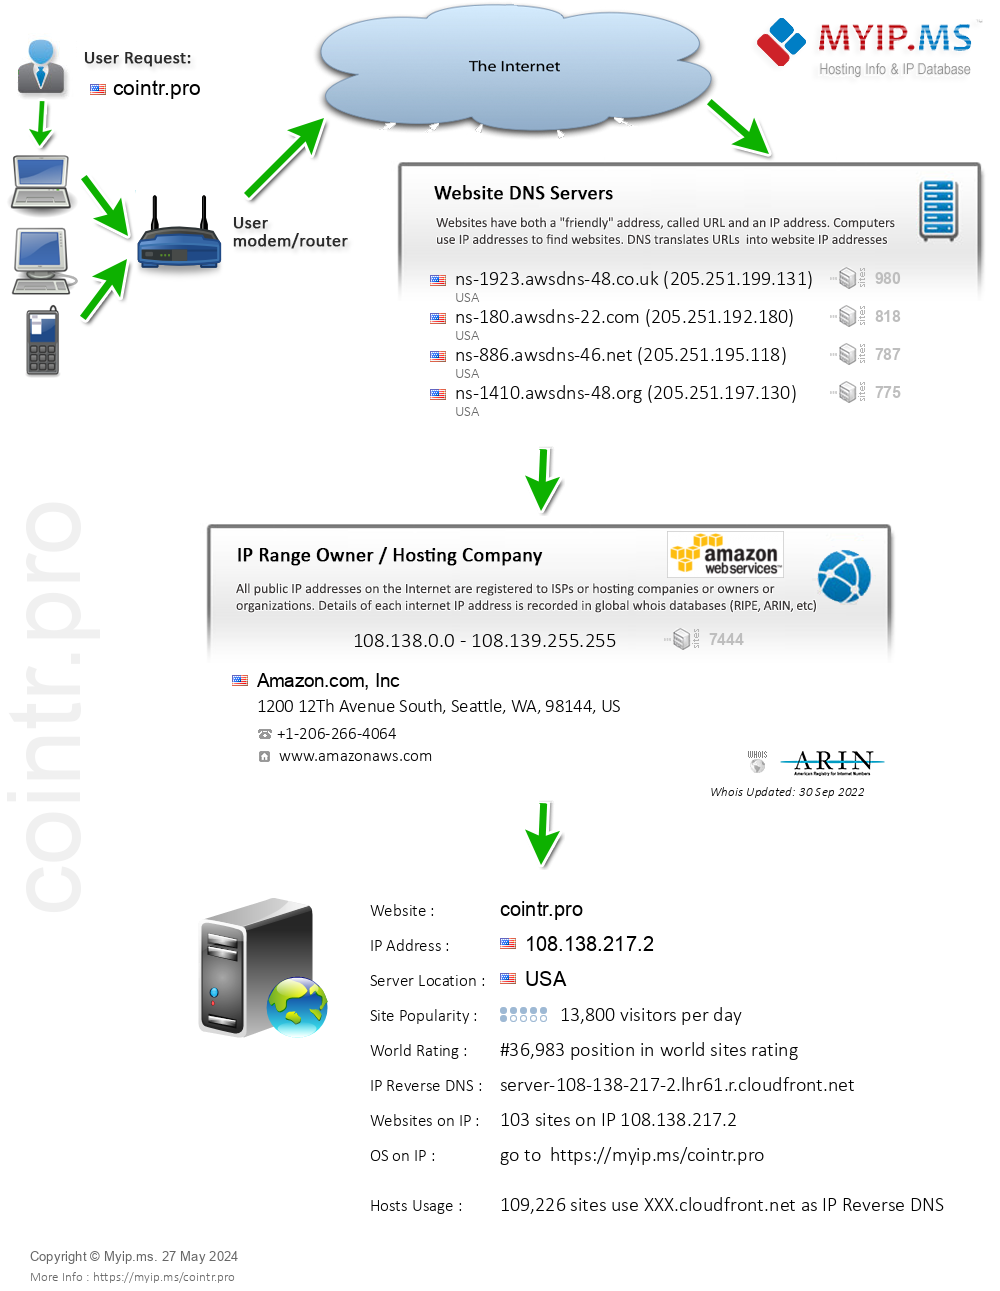 Cointr.pro - Website Hosting Visual IP Diagram